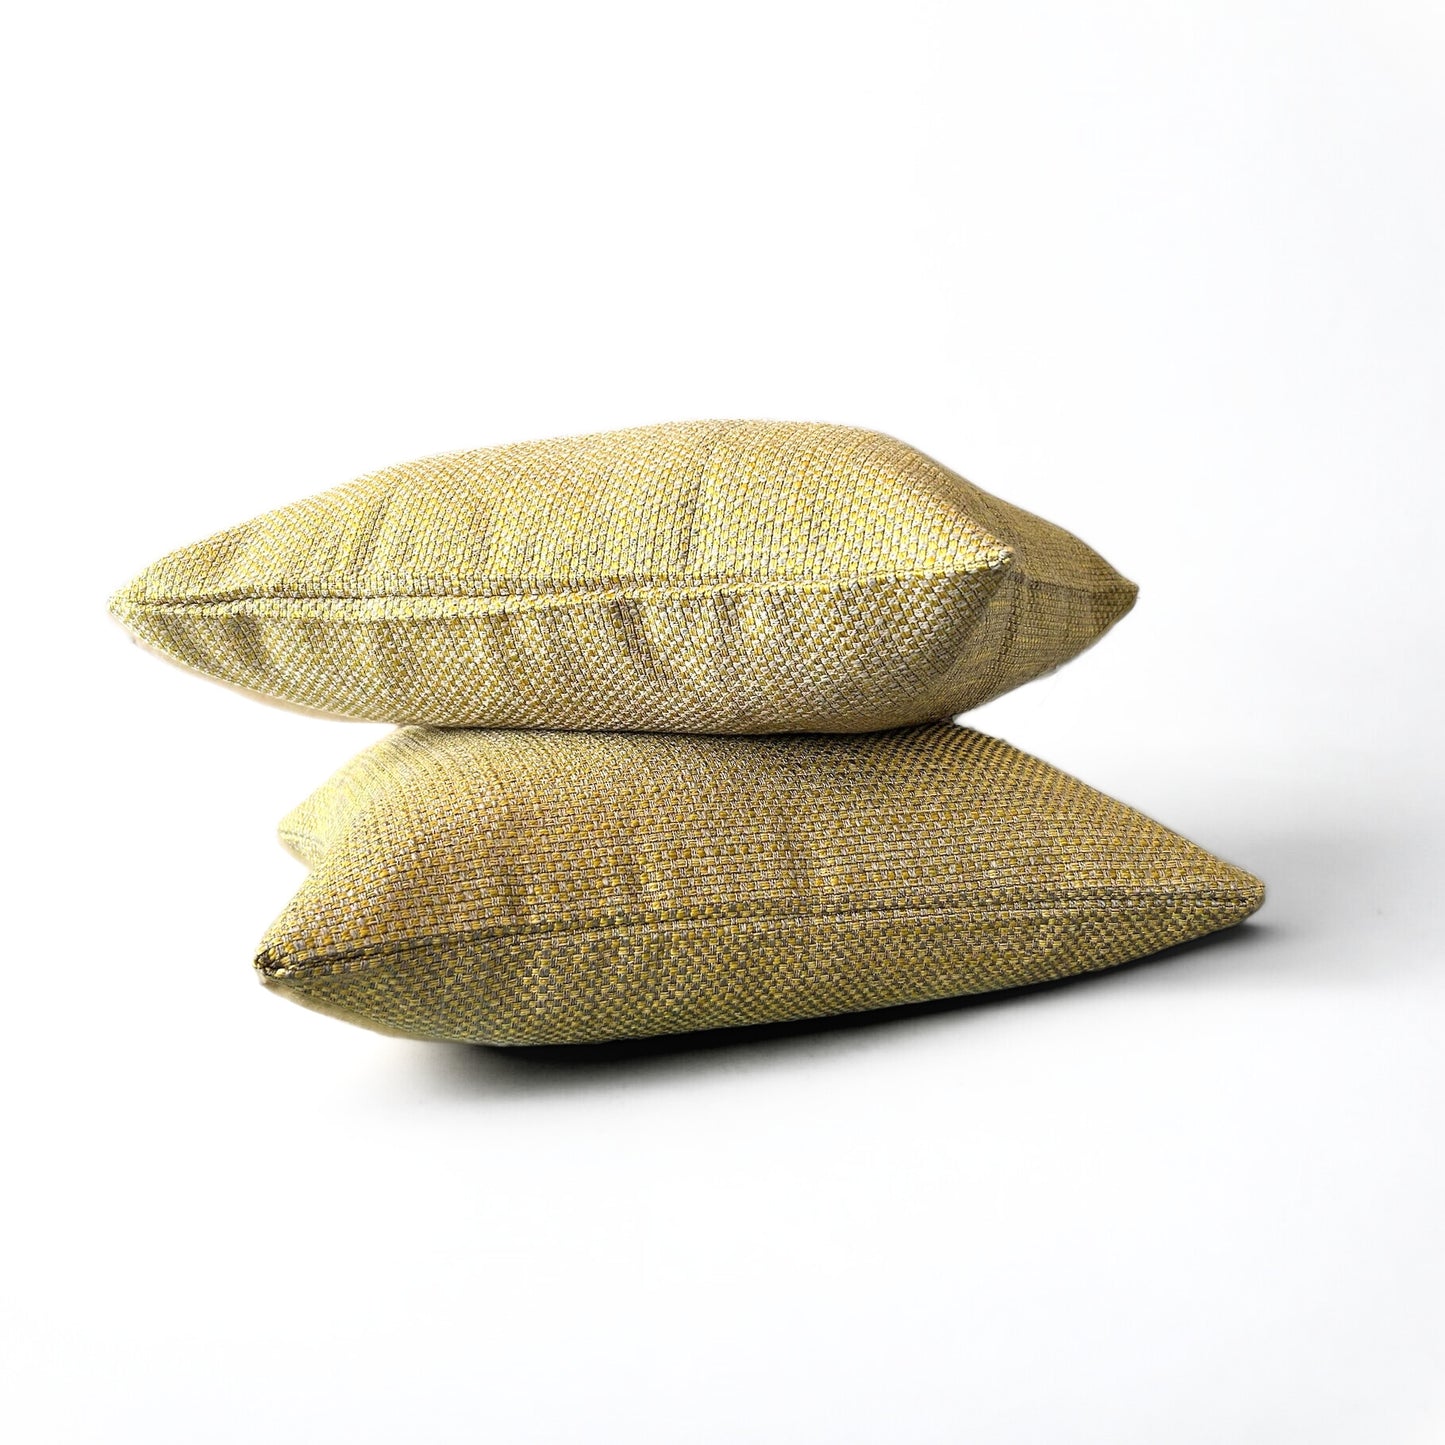 Woven Grass - Sustainable Décor Pillows